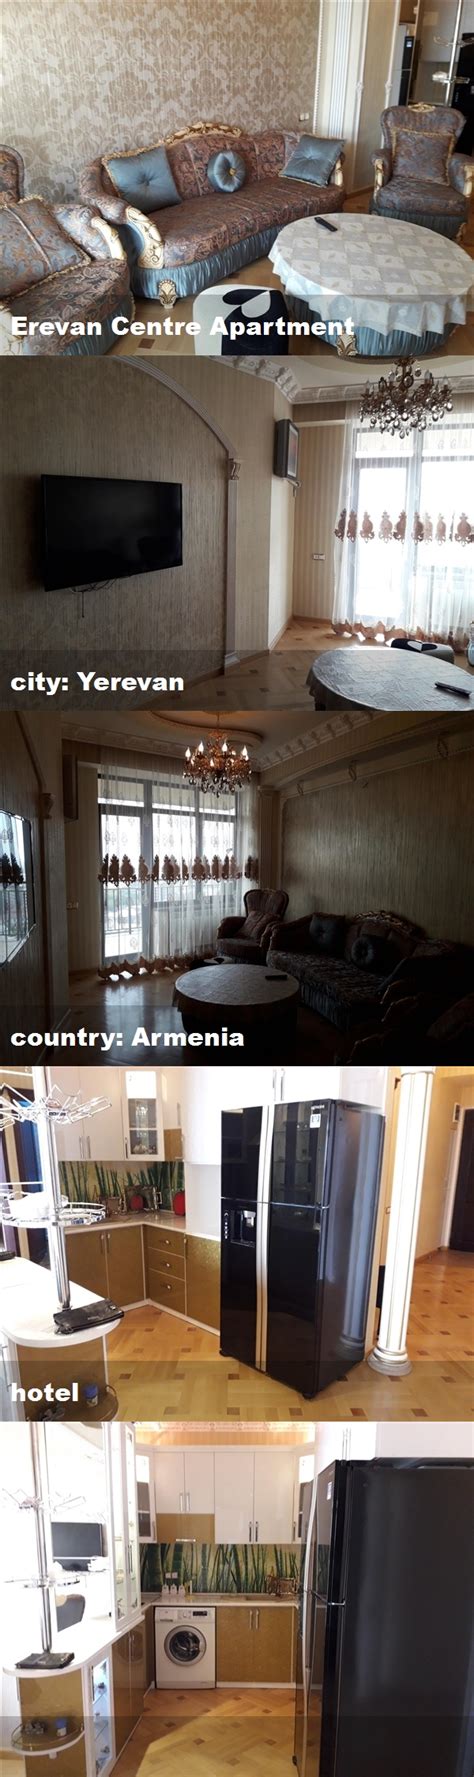 erevan centre apartment city yerevan country armenia hotel hotel